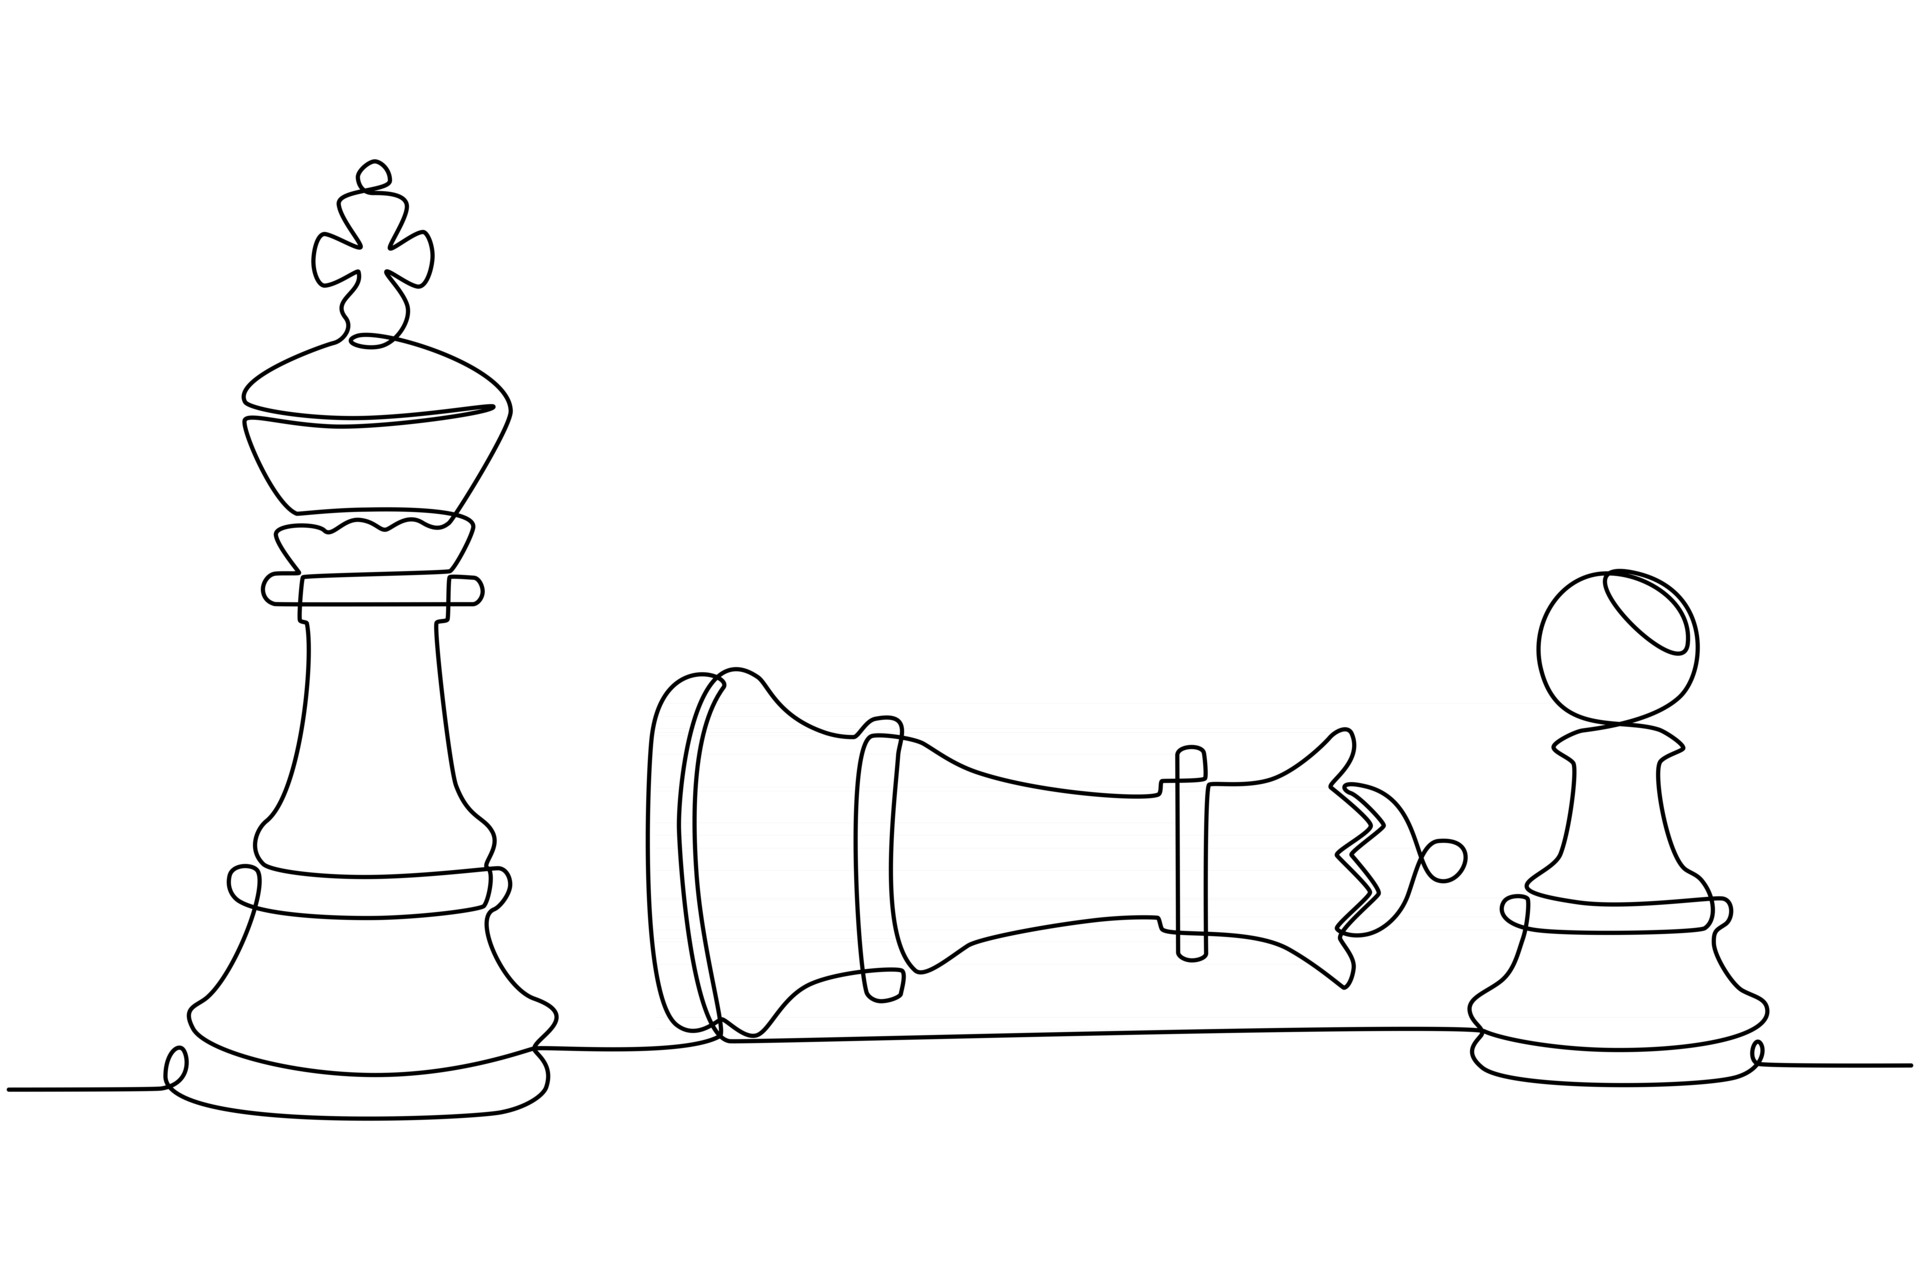 Desenho de xadrez